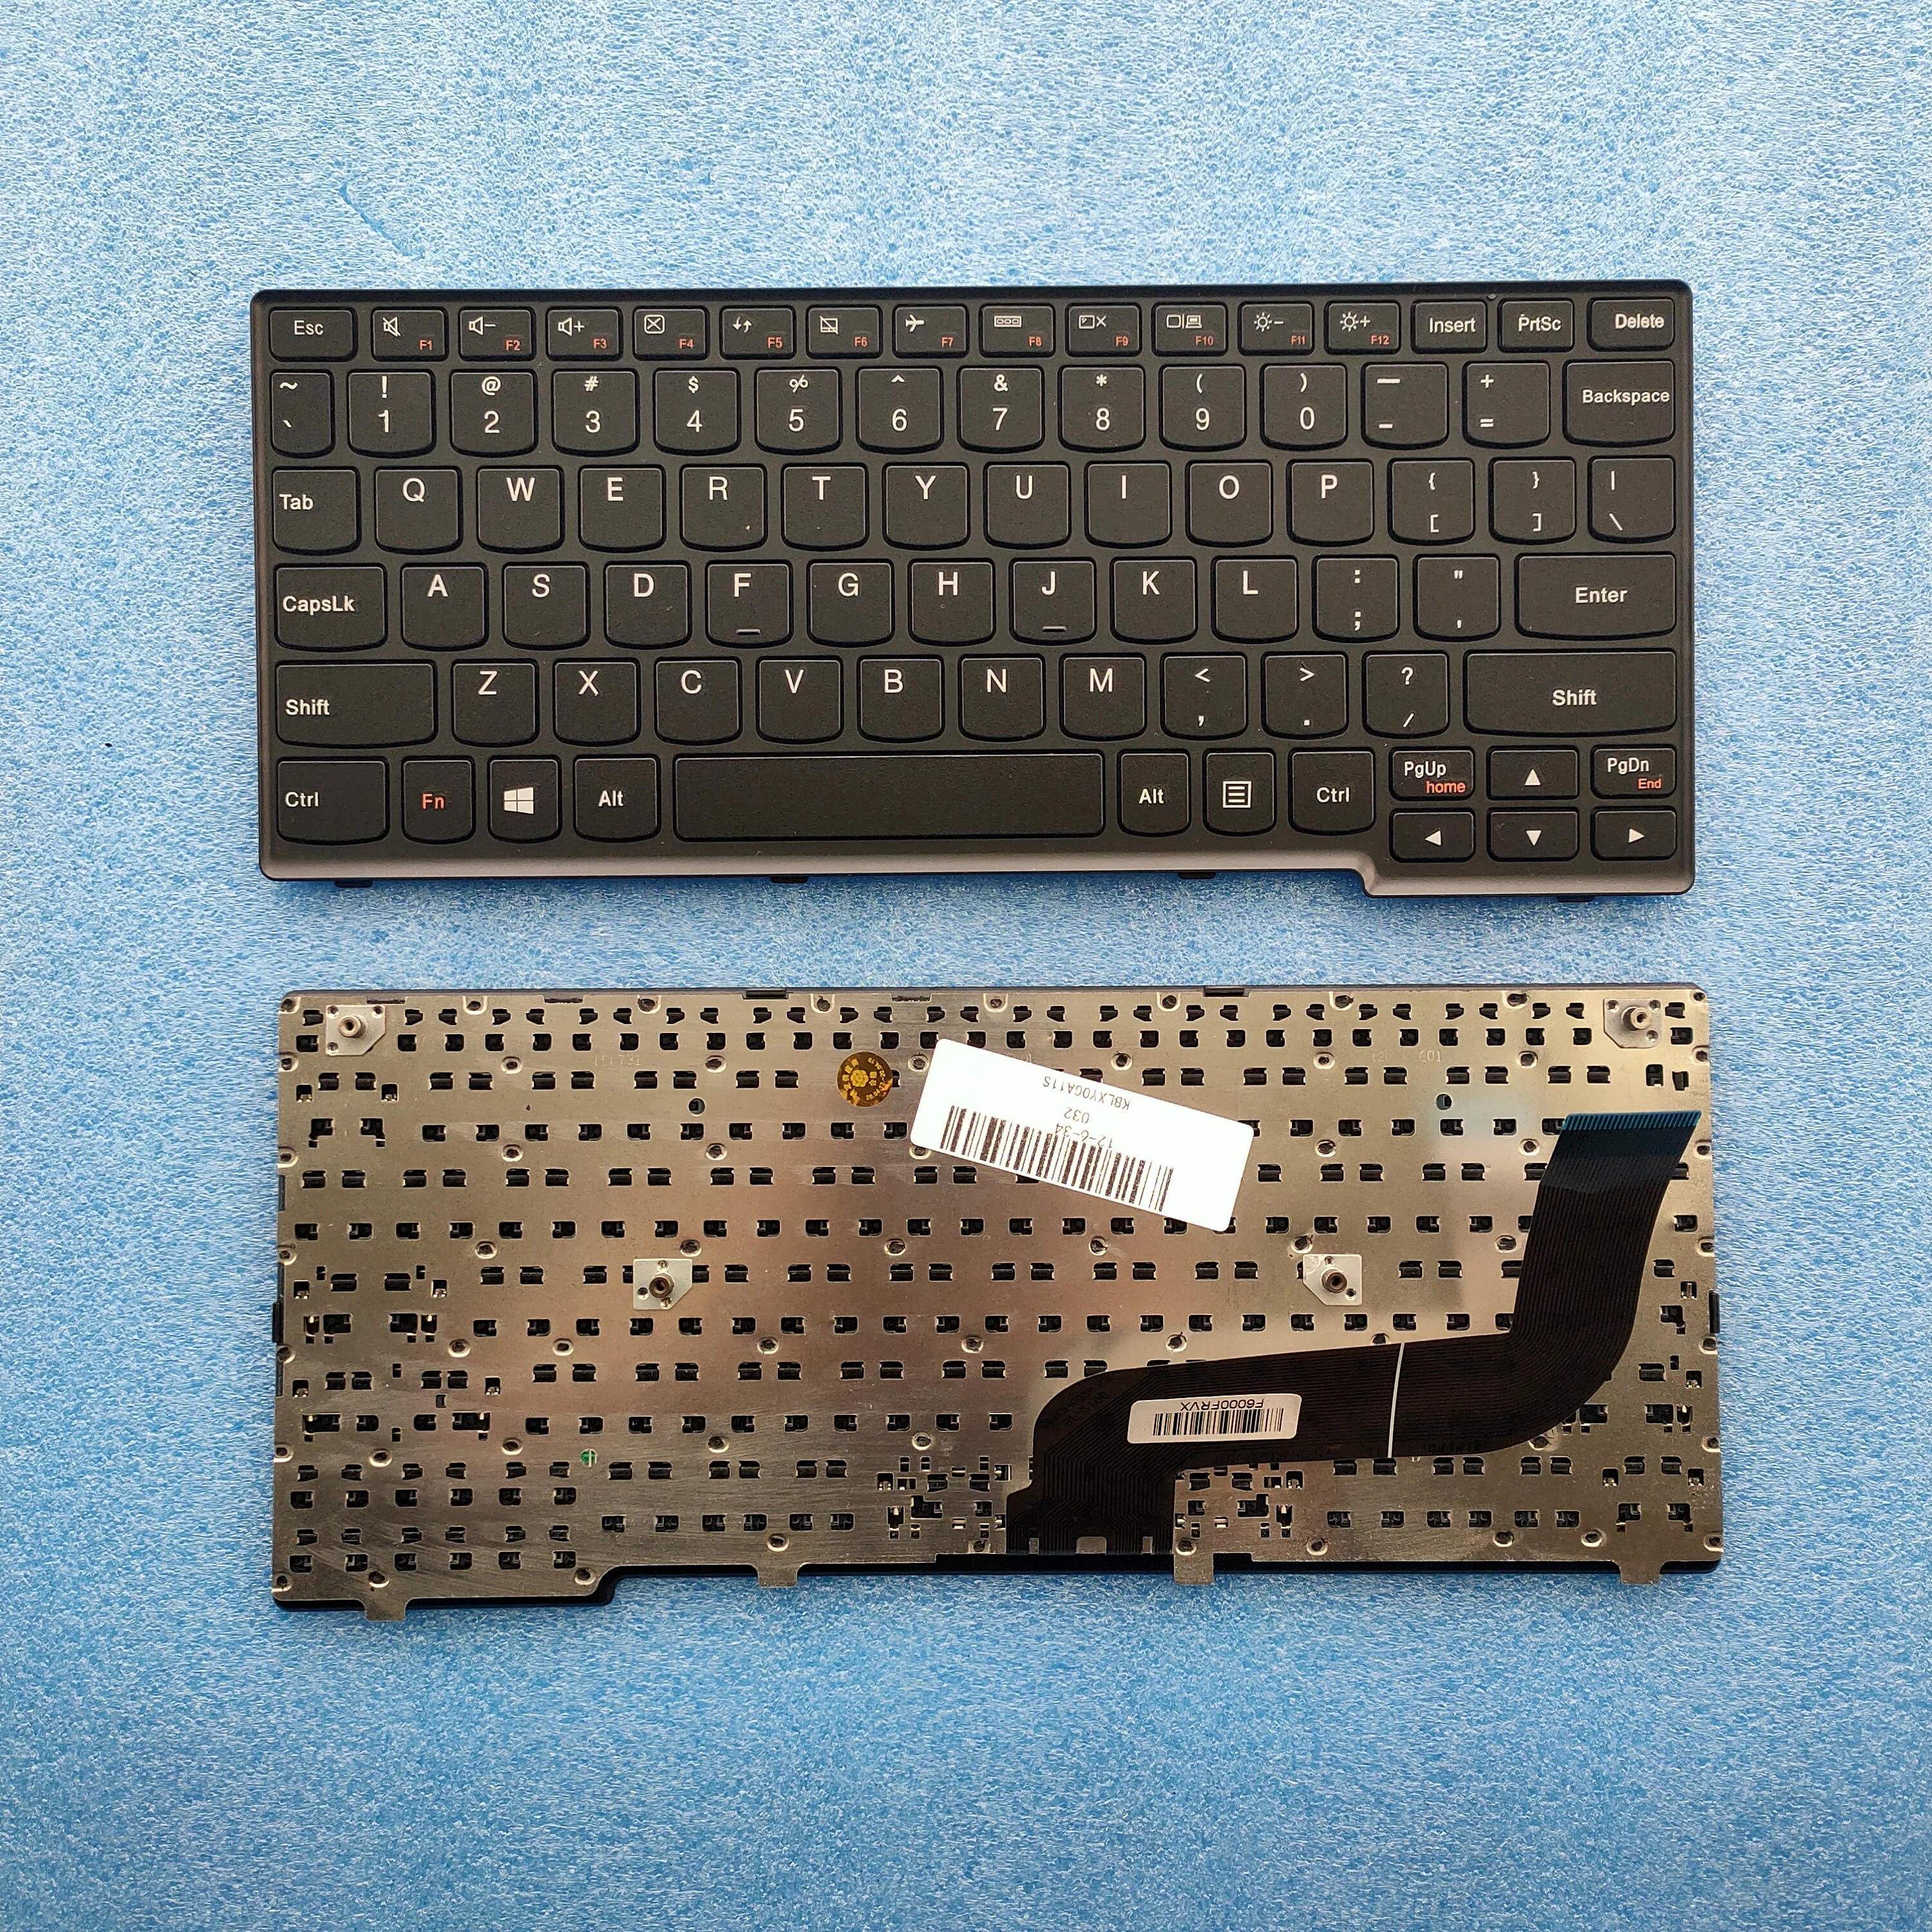 

New Original UK English Keyboard for Lenovo Ideapad Yoga 11S S210 S215 Flex 10 S20-30 S21e-20 Laptop 25210832 25210802 25210862